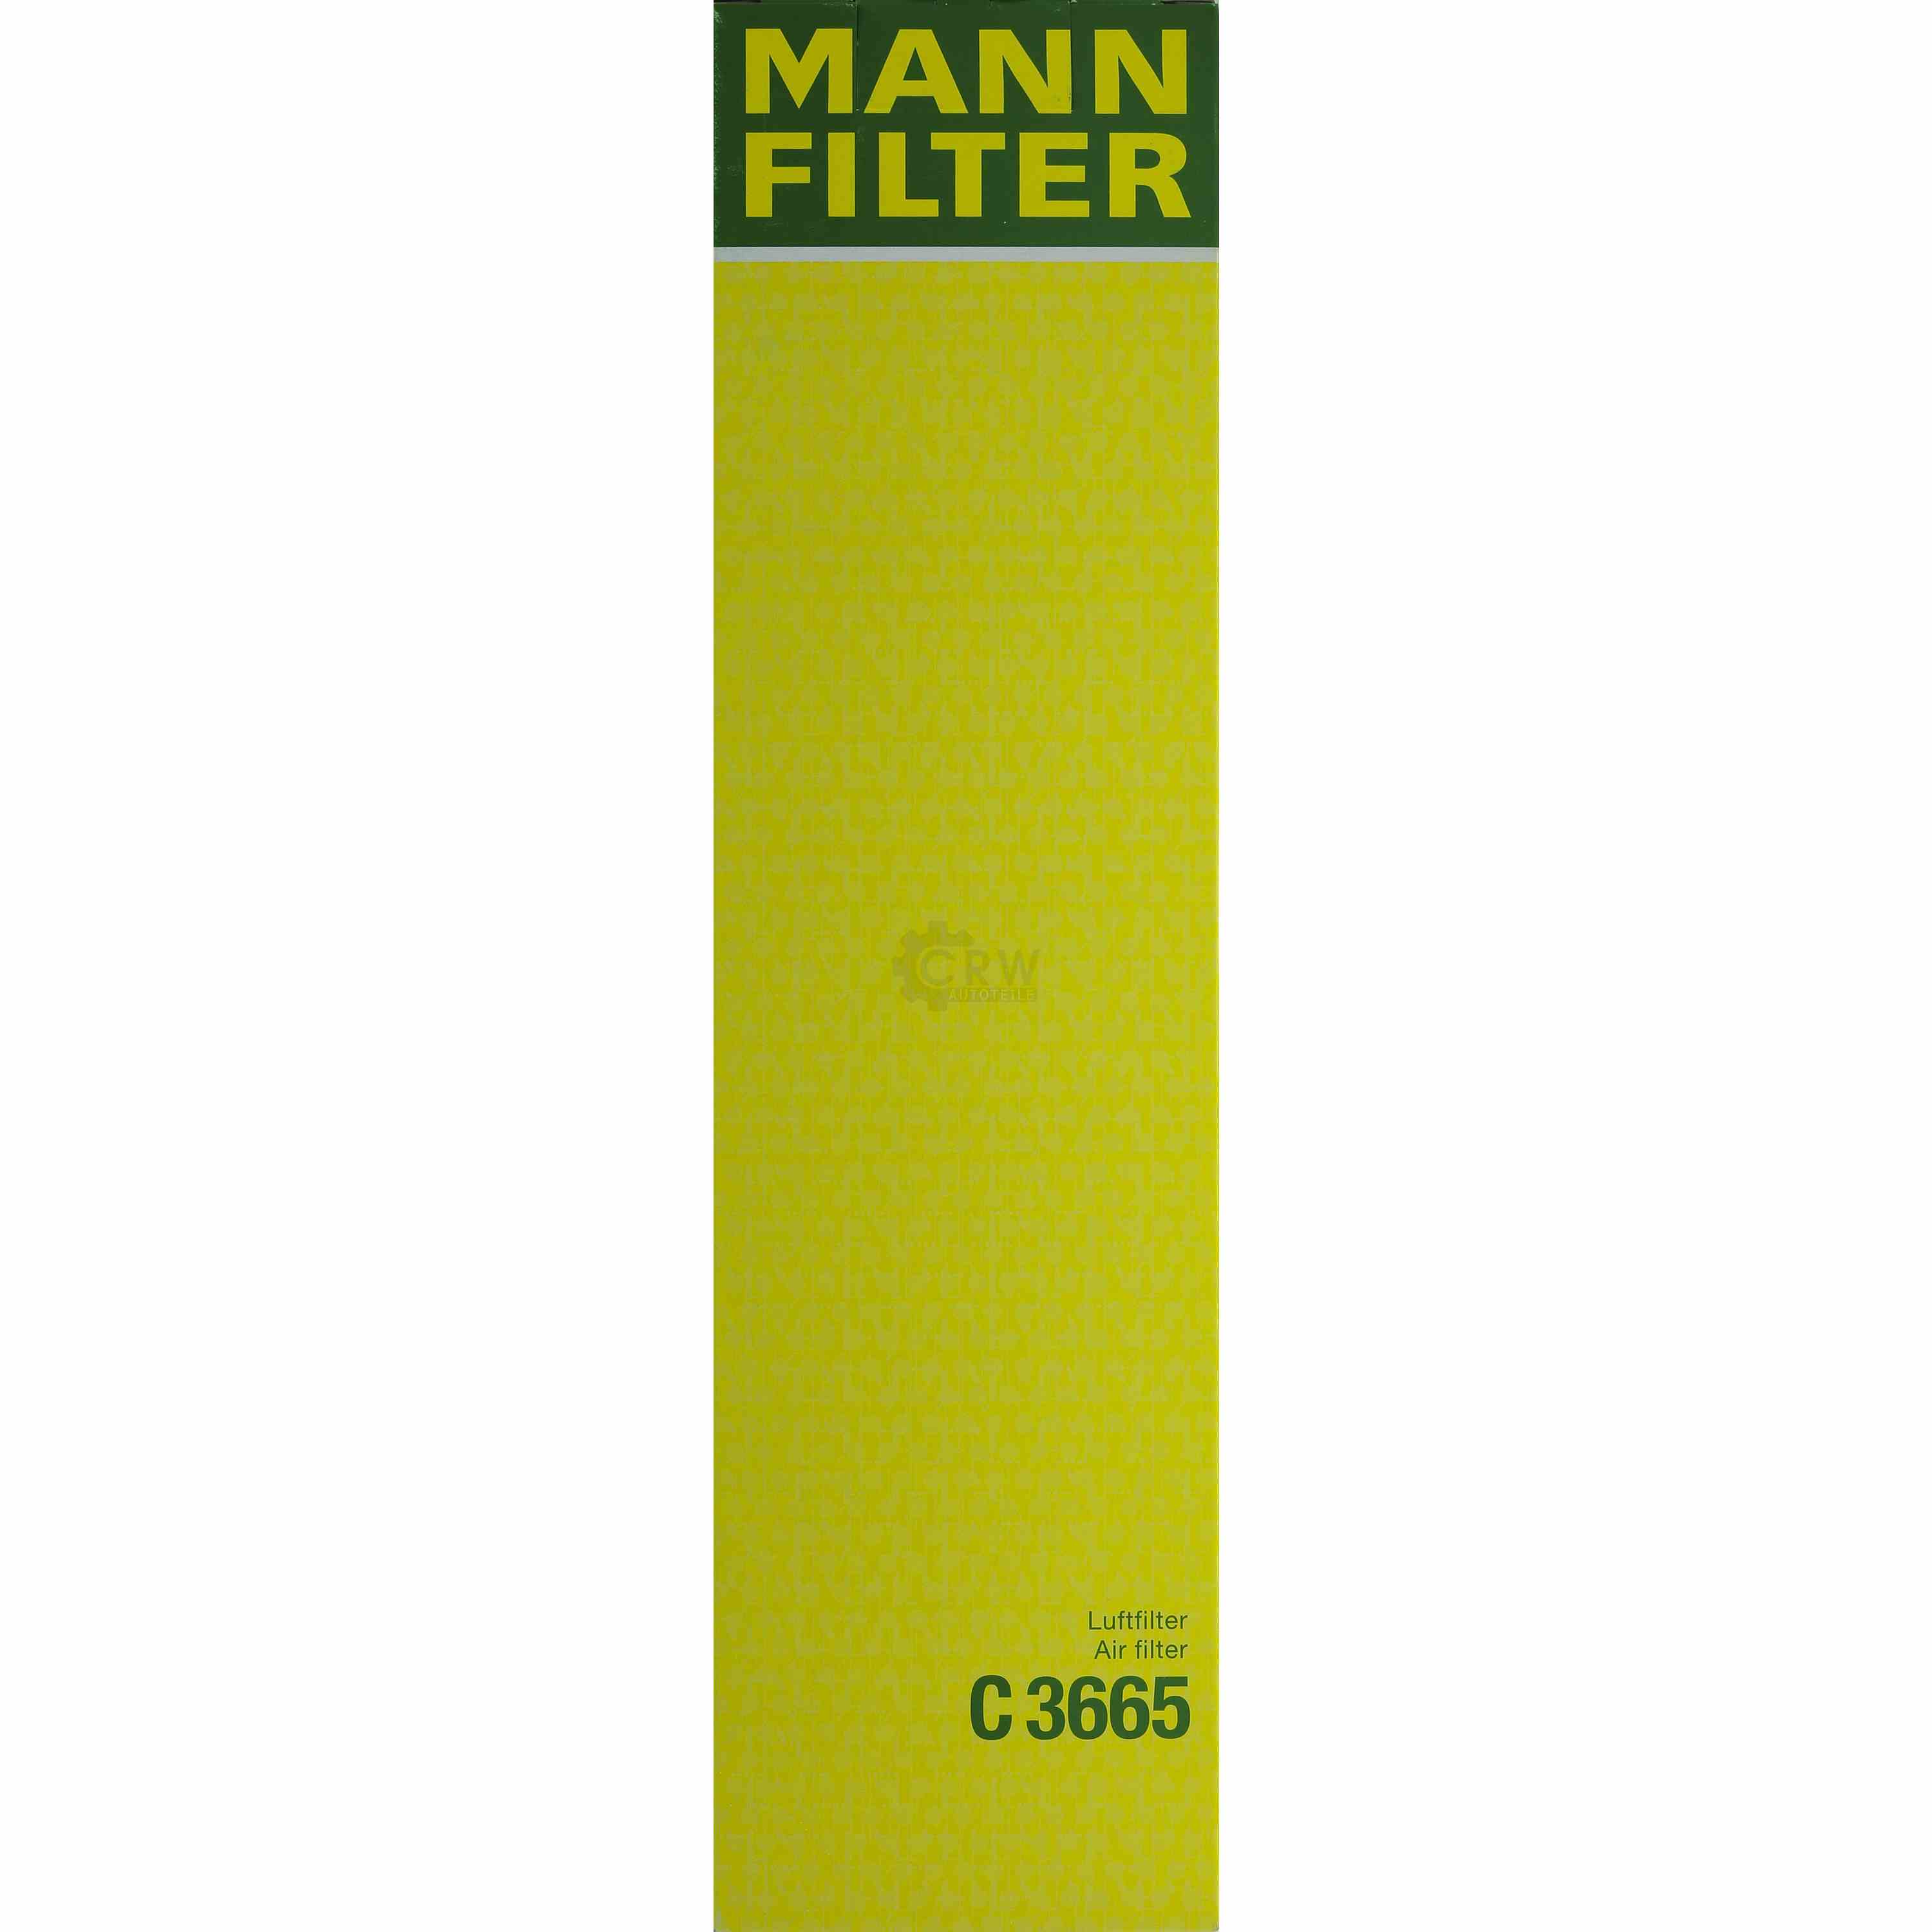 MANN-FILTER Luftfilter für Ford Escort II ATH 2.0 RS Capri ECJ 1600 GECP 1.6